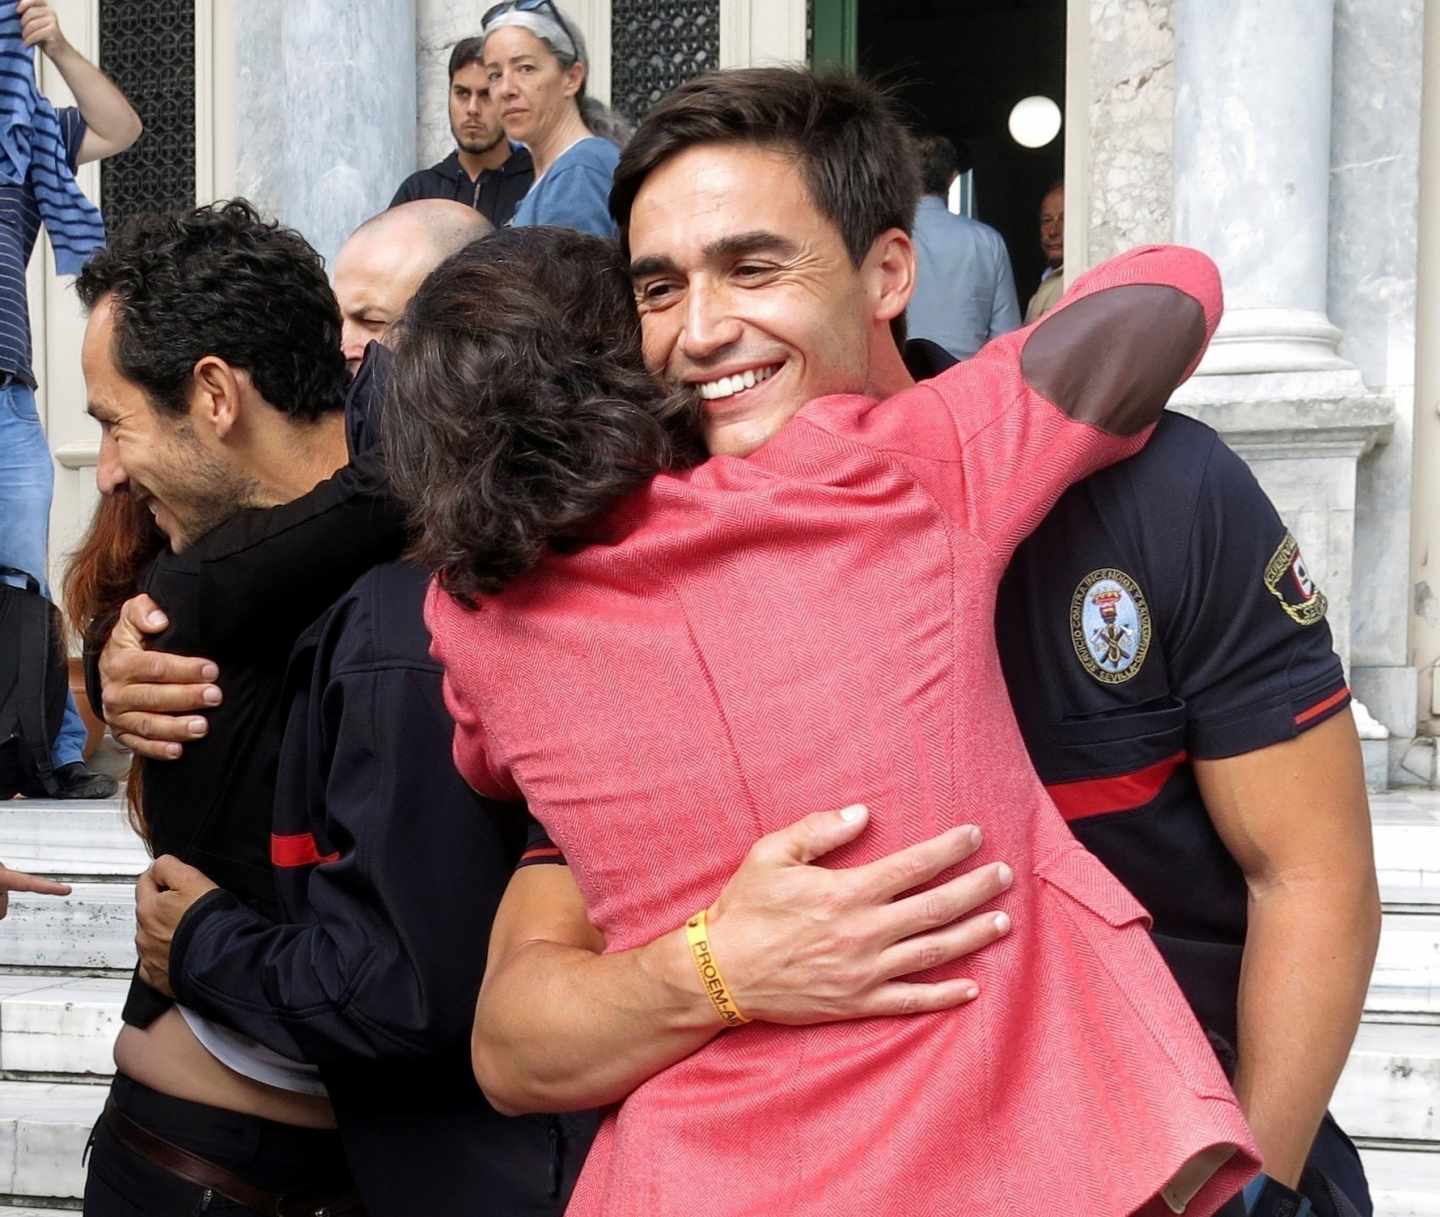 La consejera de Justicia de la Junta de Andalucía, Rosa Aguilar, abraza a José Enrique Rodríguez, uno de los tres bomberos de la ONG Proem-Aid que han llegado esta mañana al tribunal de Lesbos